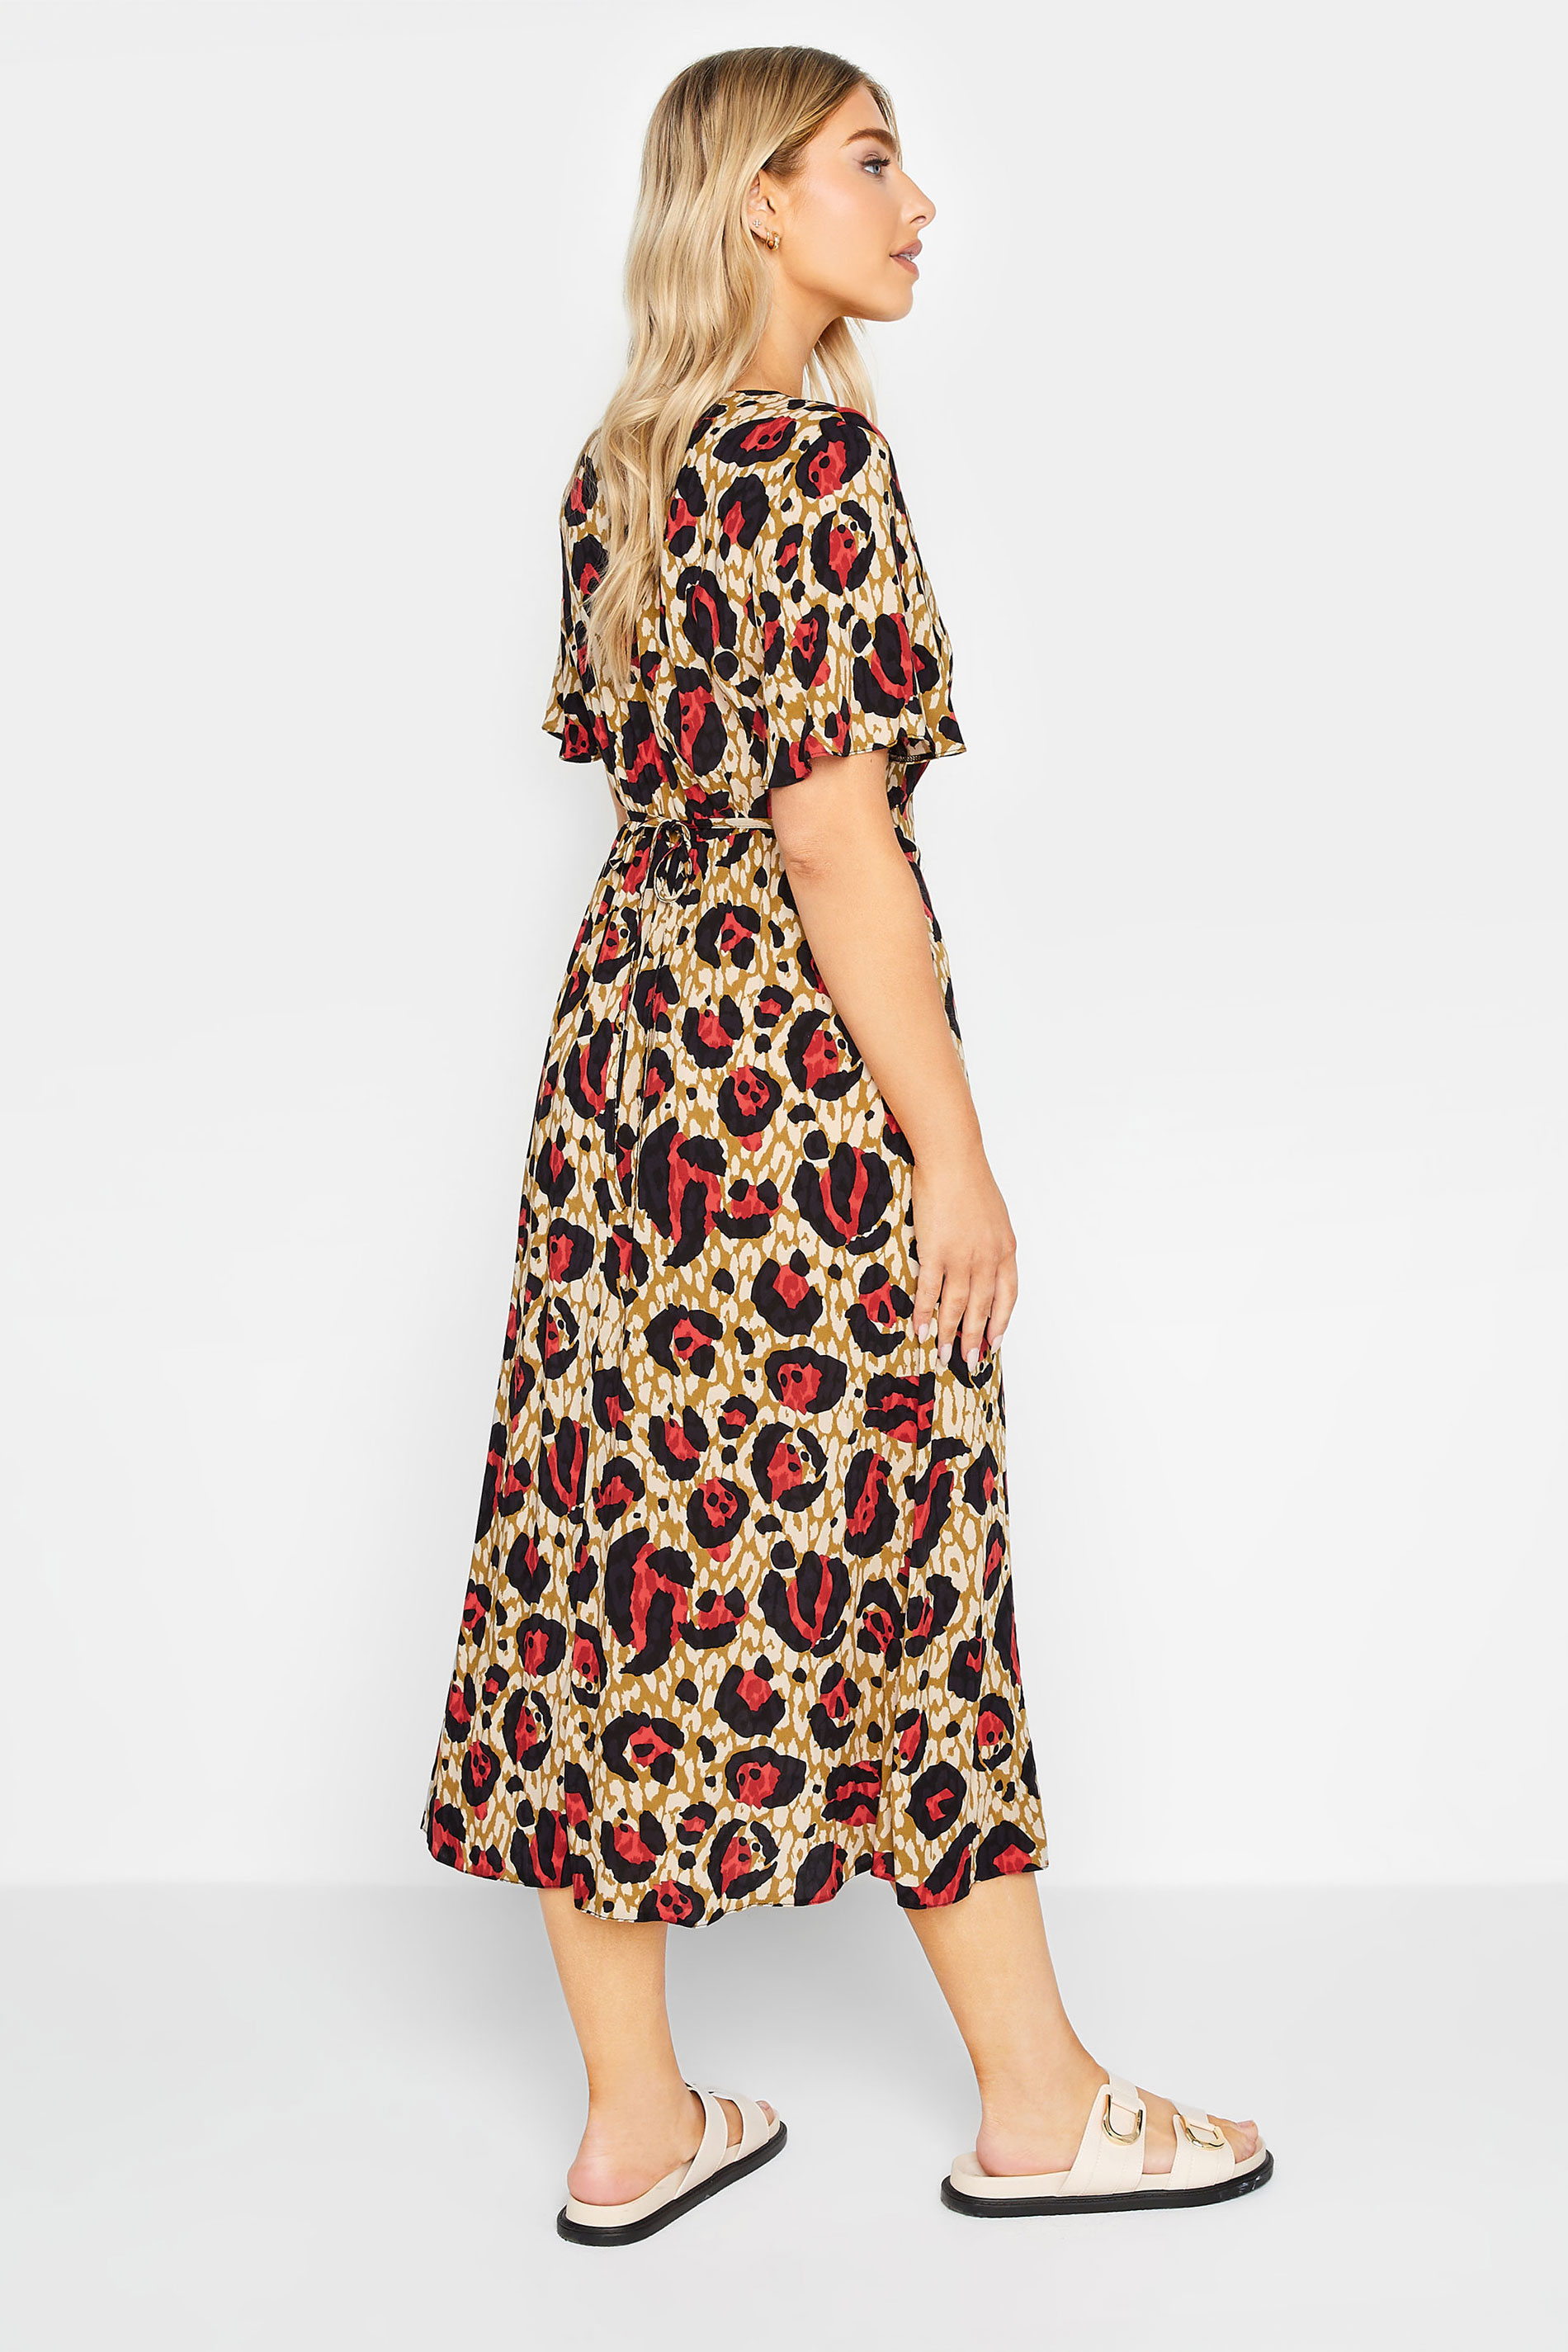 M&Co Natural Brown & Red Leopard Print Midi Button Through Tea Dress | M&Co  3